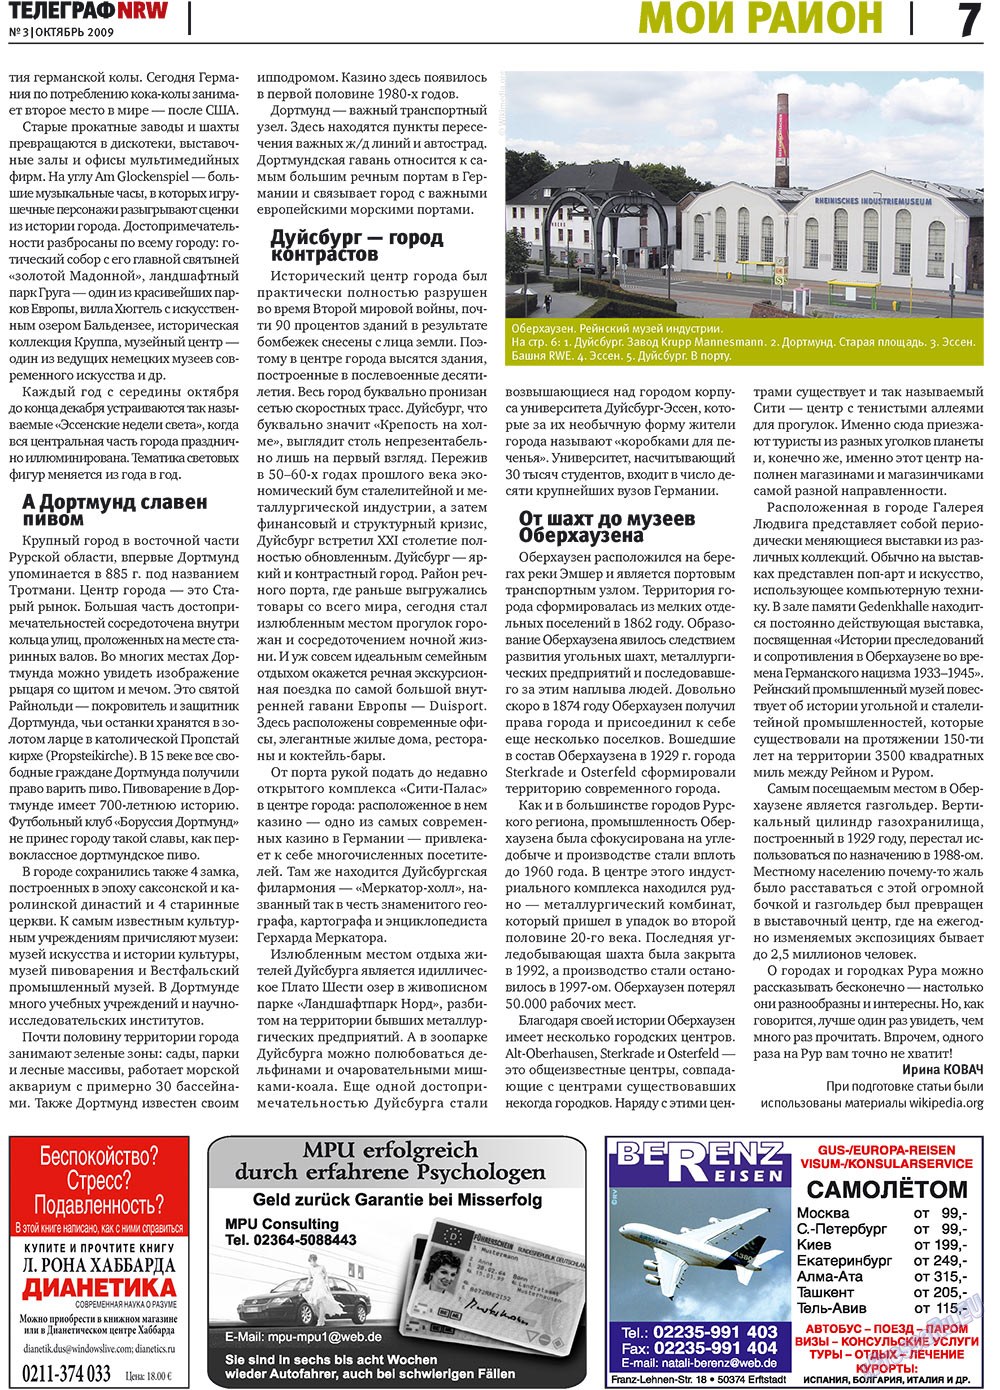 Телеграф NRW, газета. 2009 №3 стр.7